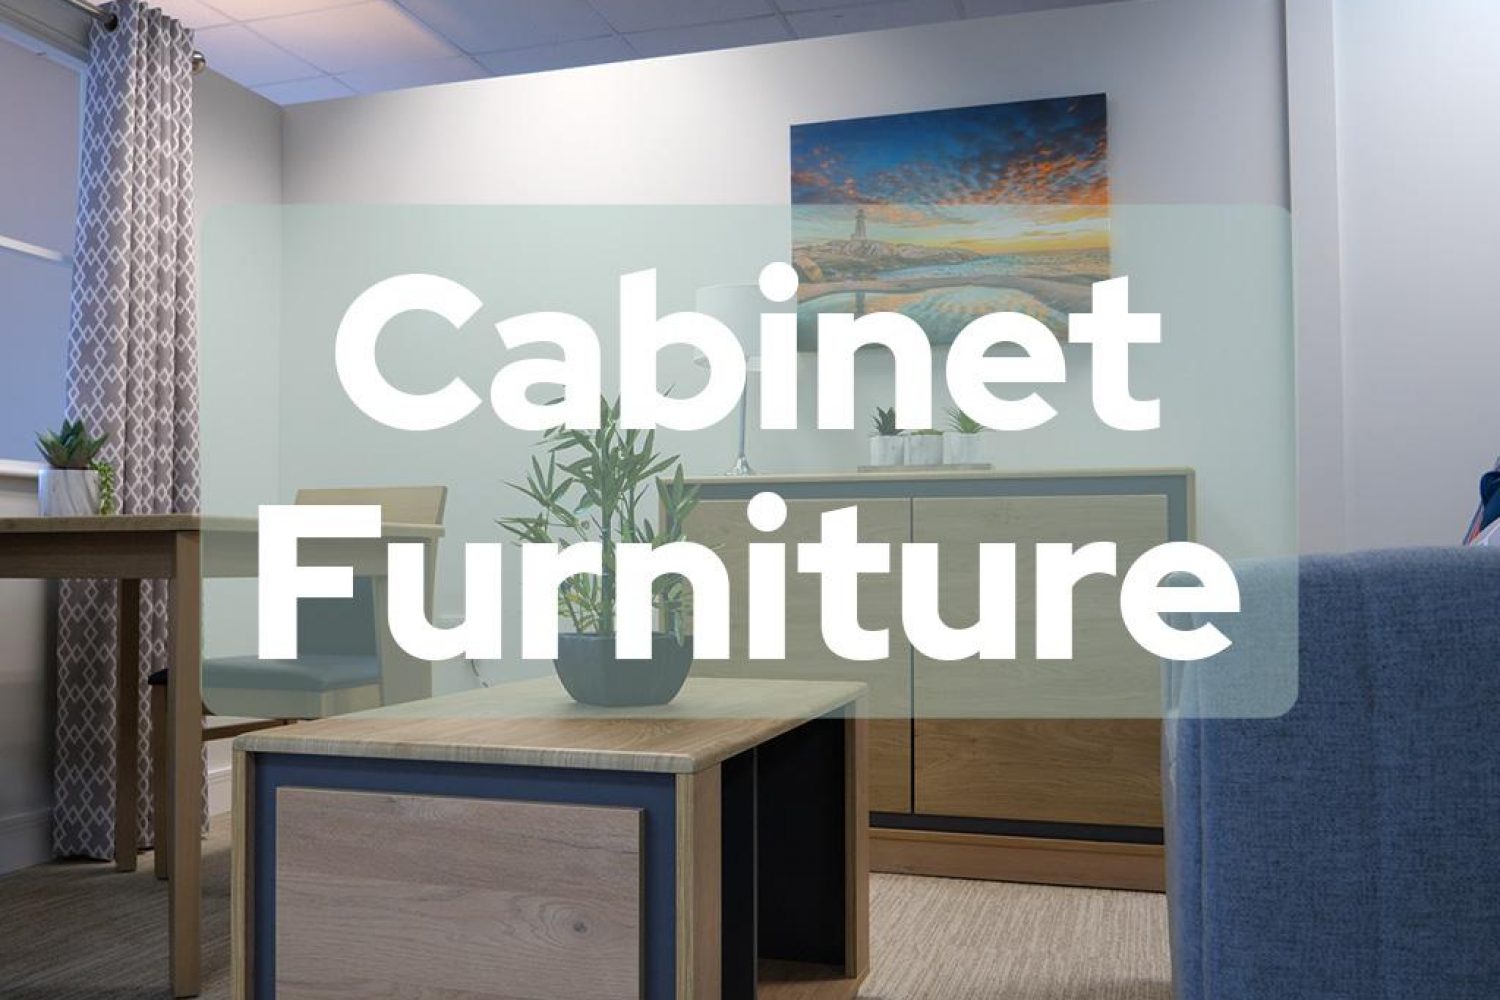 Cabinet Furniture furncare